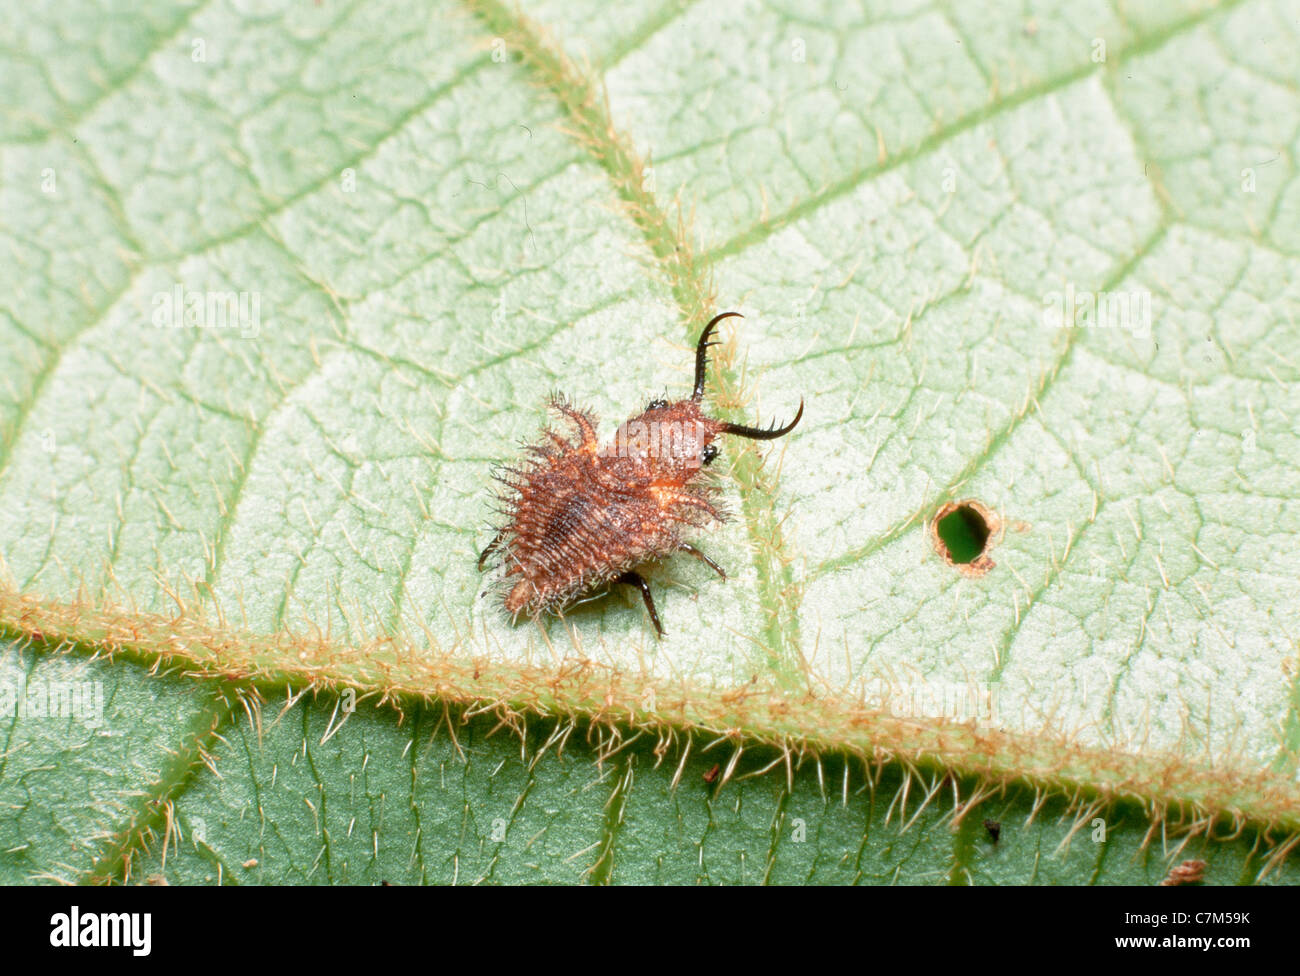 Antlion type insect larval stage, Mulu National Park, Sarawak, Borneo, East Malaysia Stock Photo